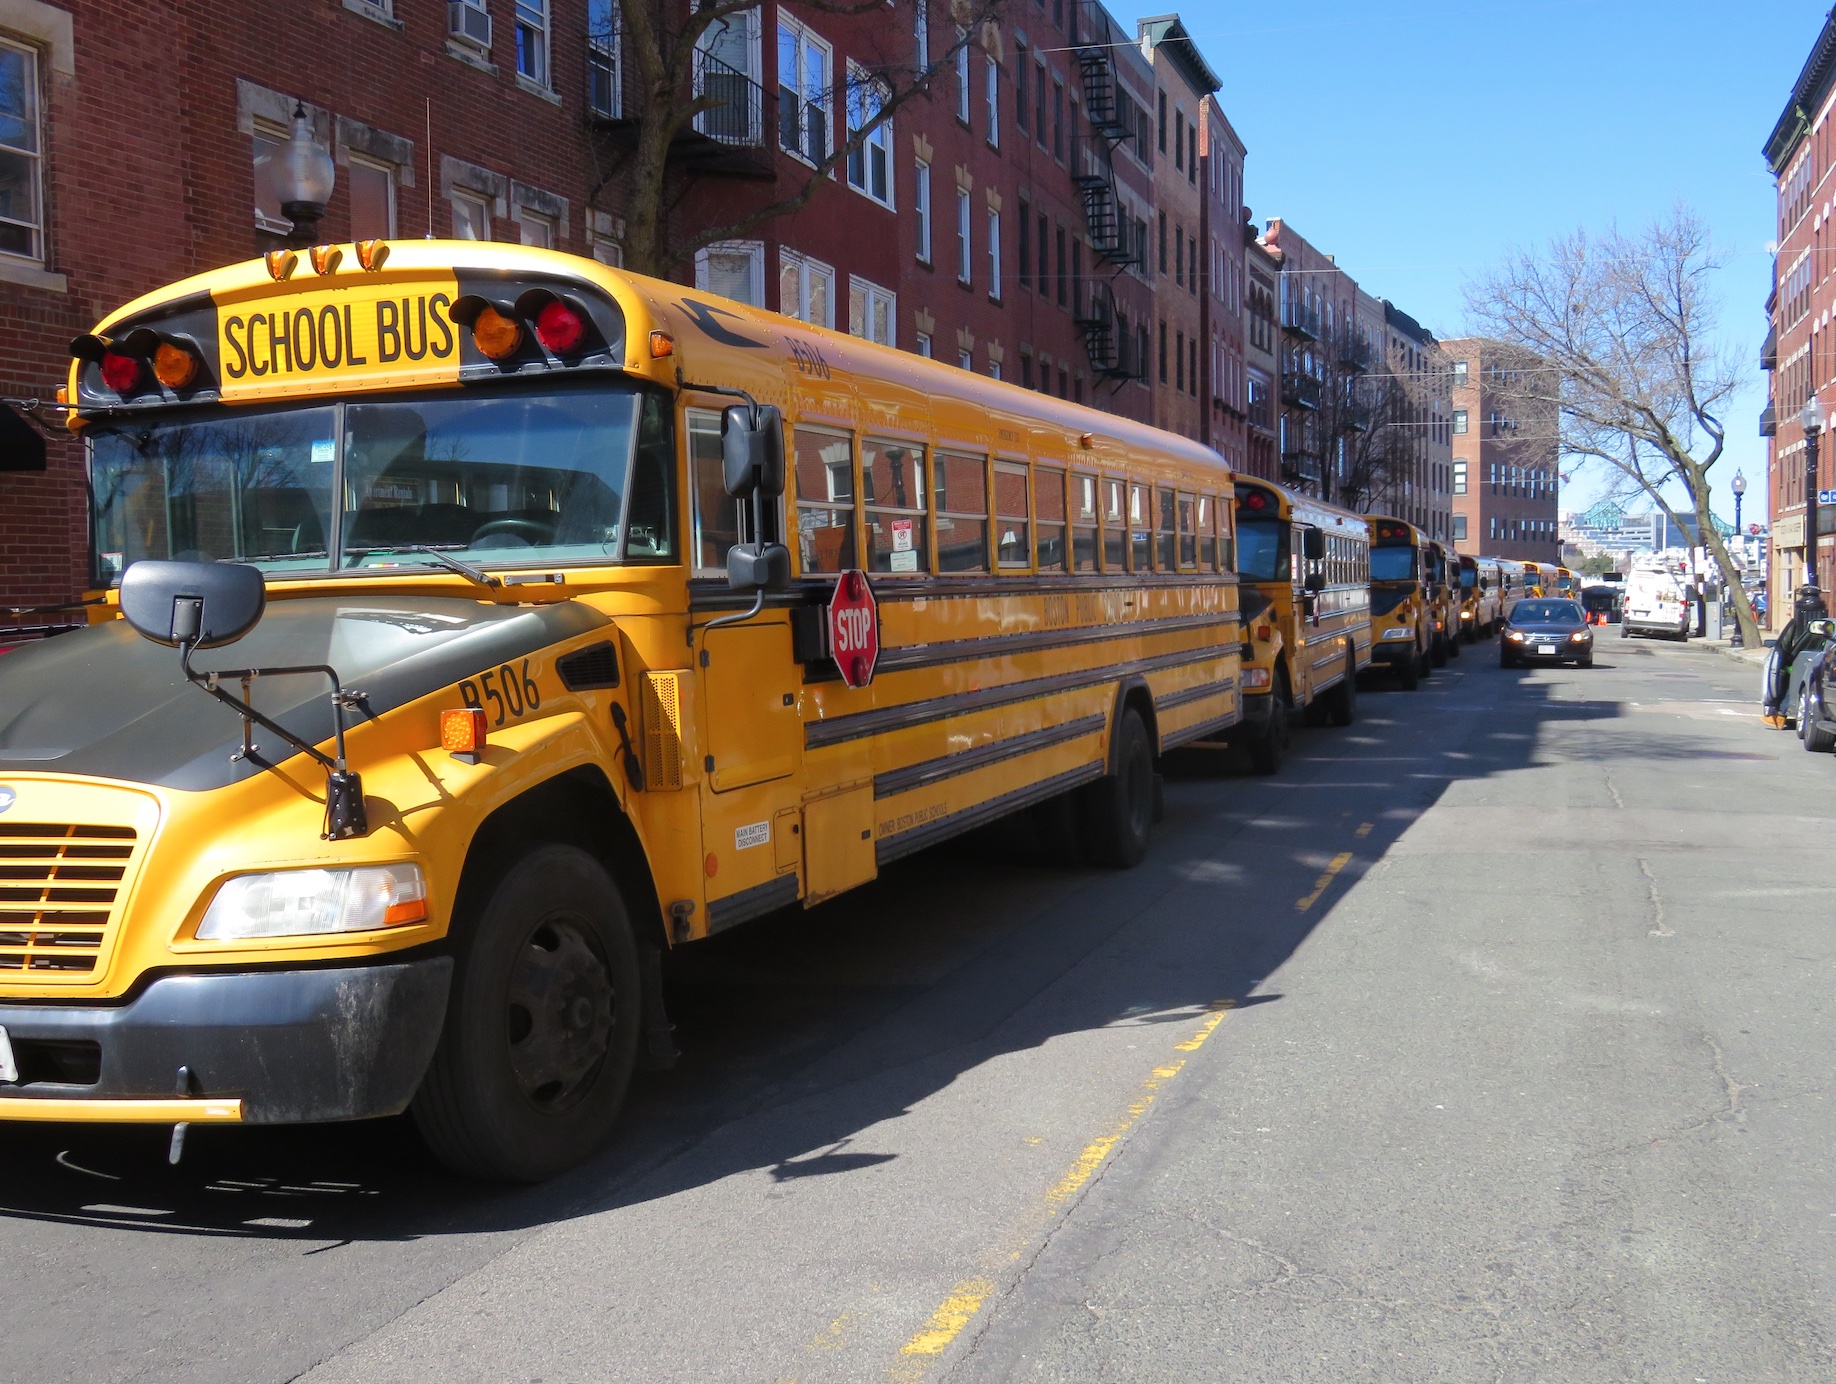 School busses lining the street; image by Darran Shelton, via Unsplash.com.